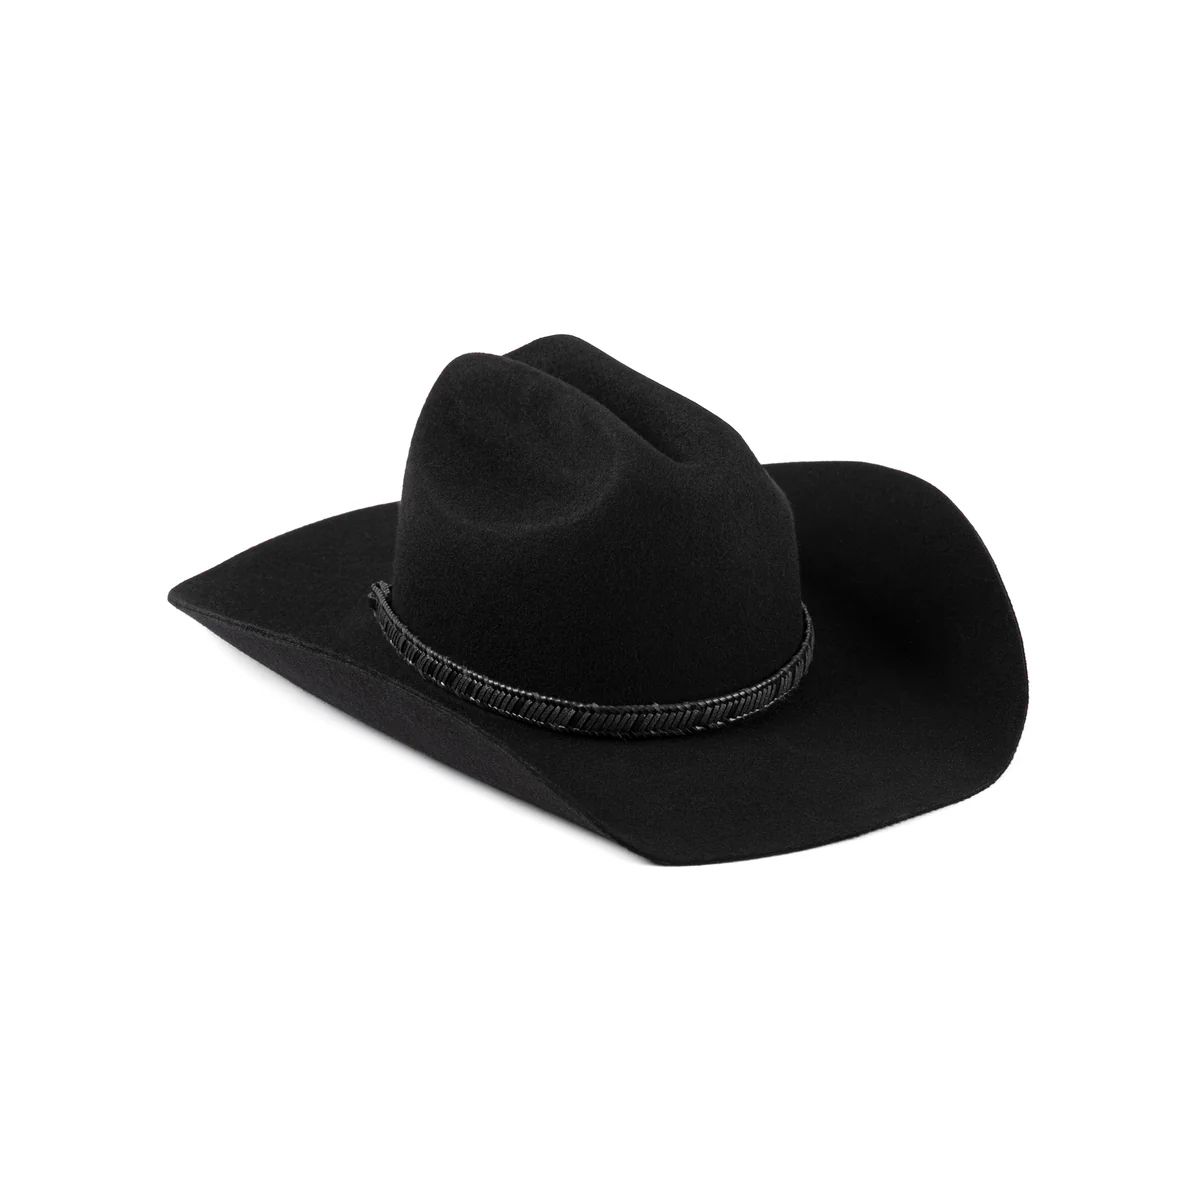 The Ridge - Wool Felt Cowboy Hat in Black | Lack of Color | Lack of Color